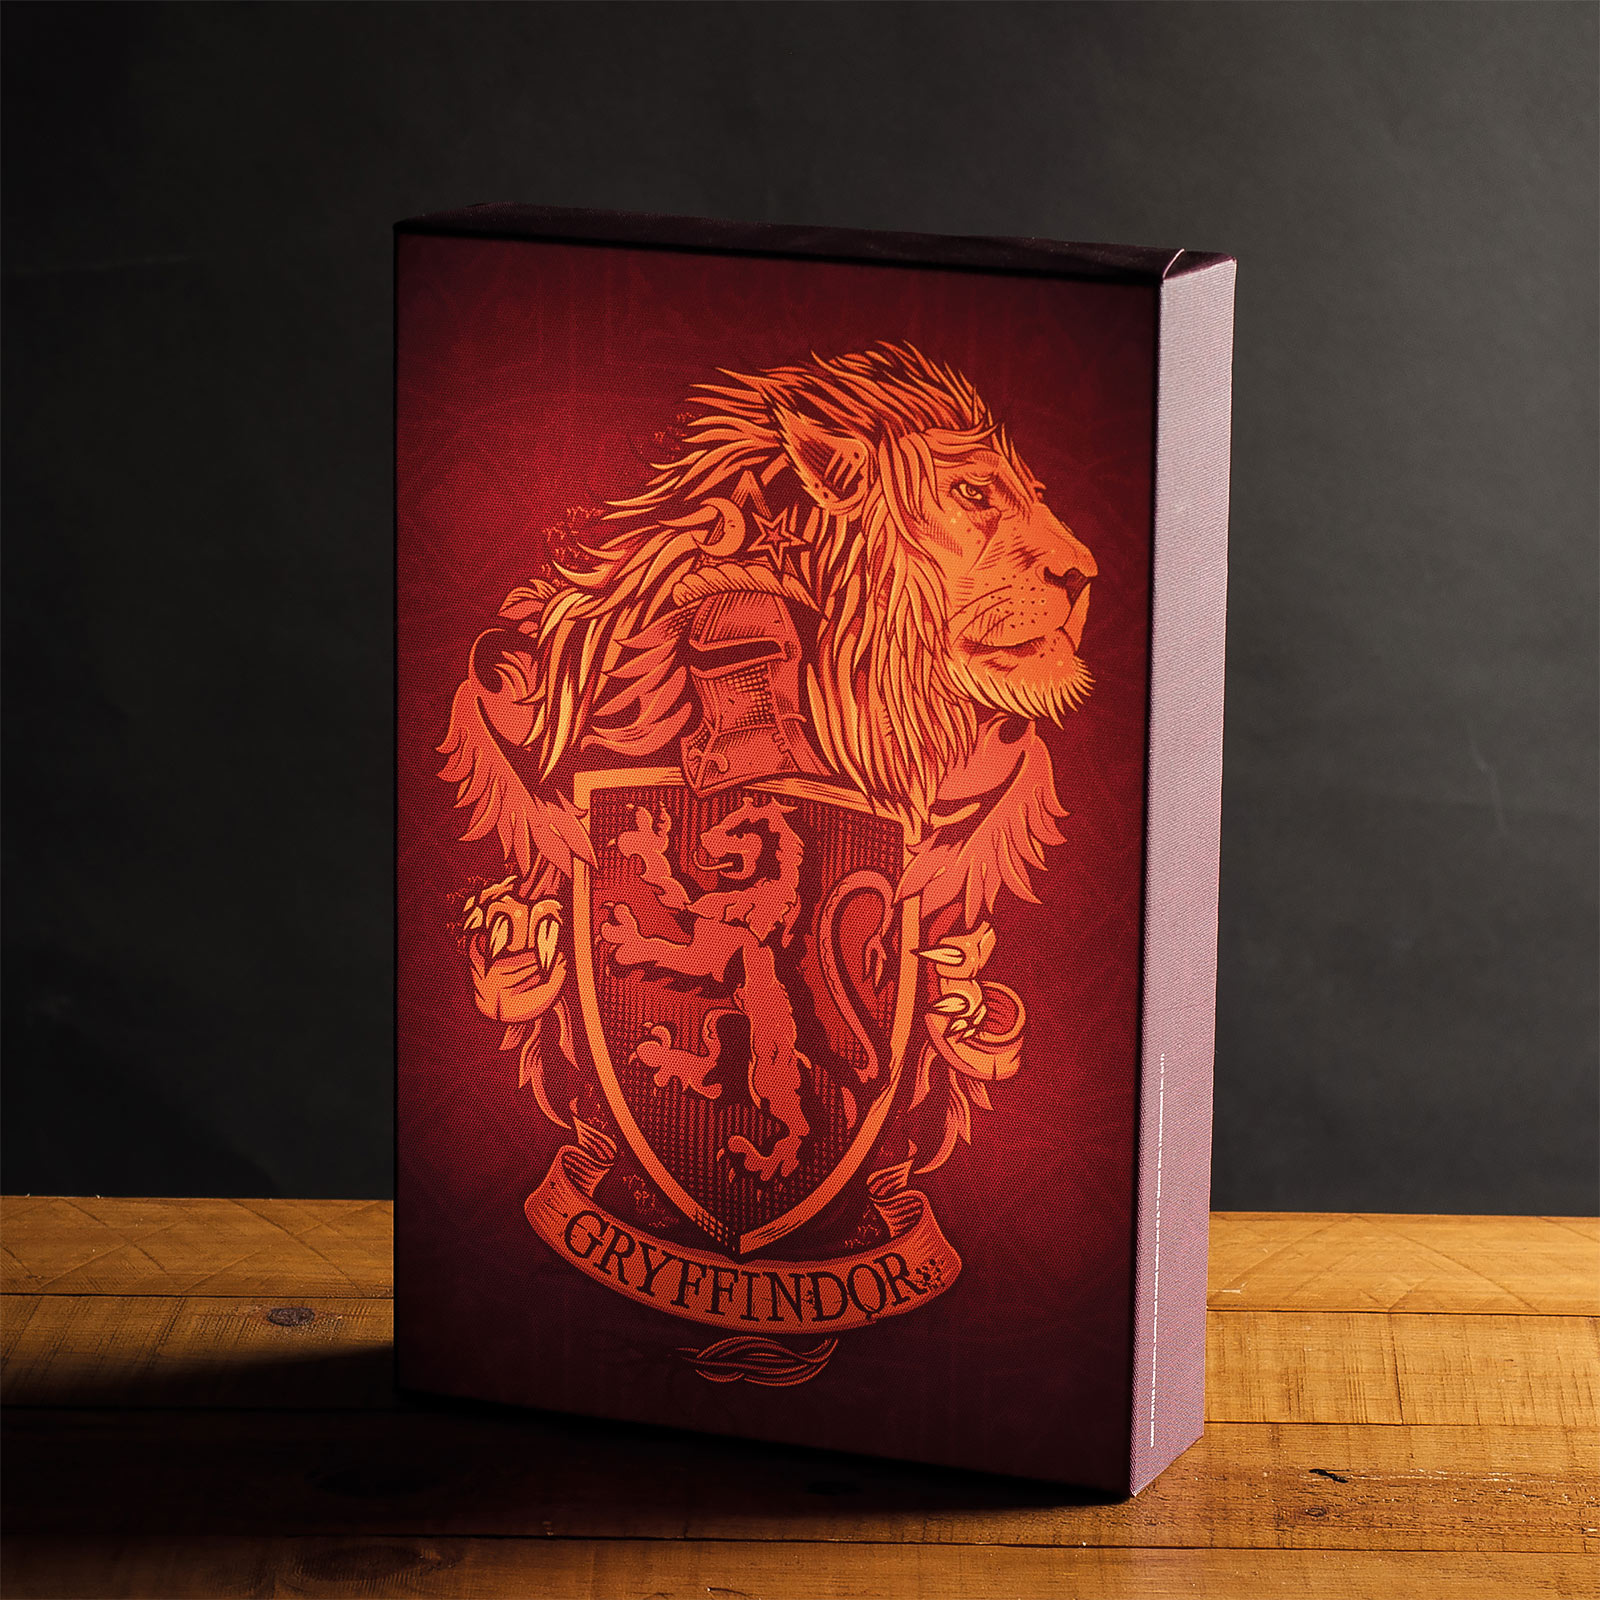 Harry Potter - Tableau mural Gryffondor avec lumière